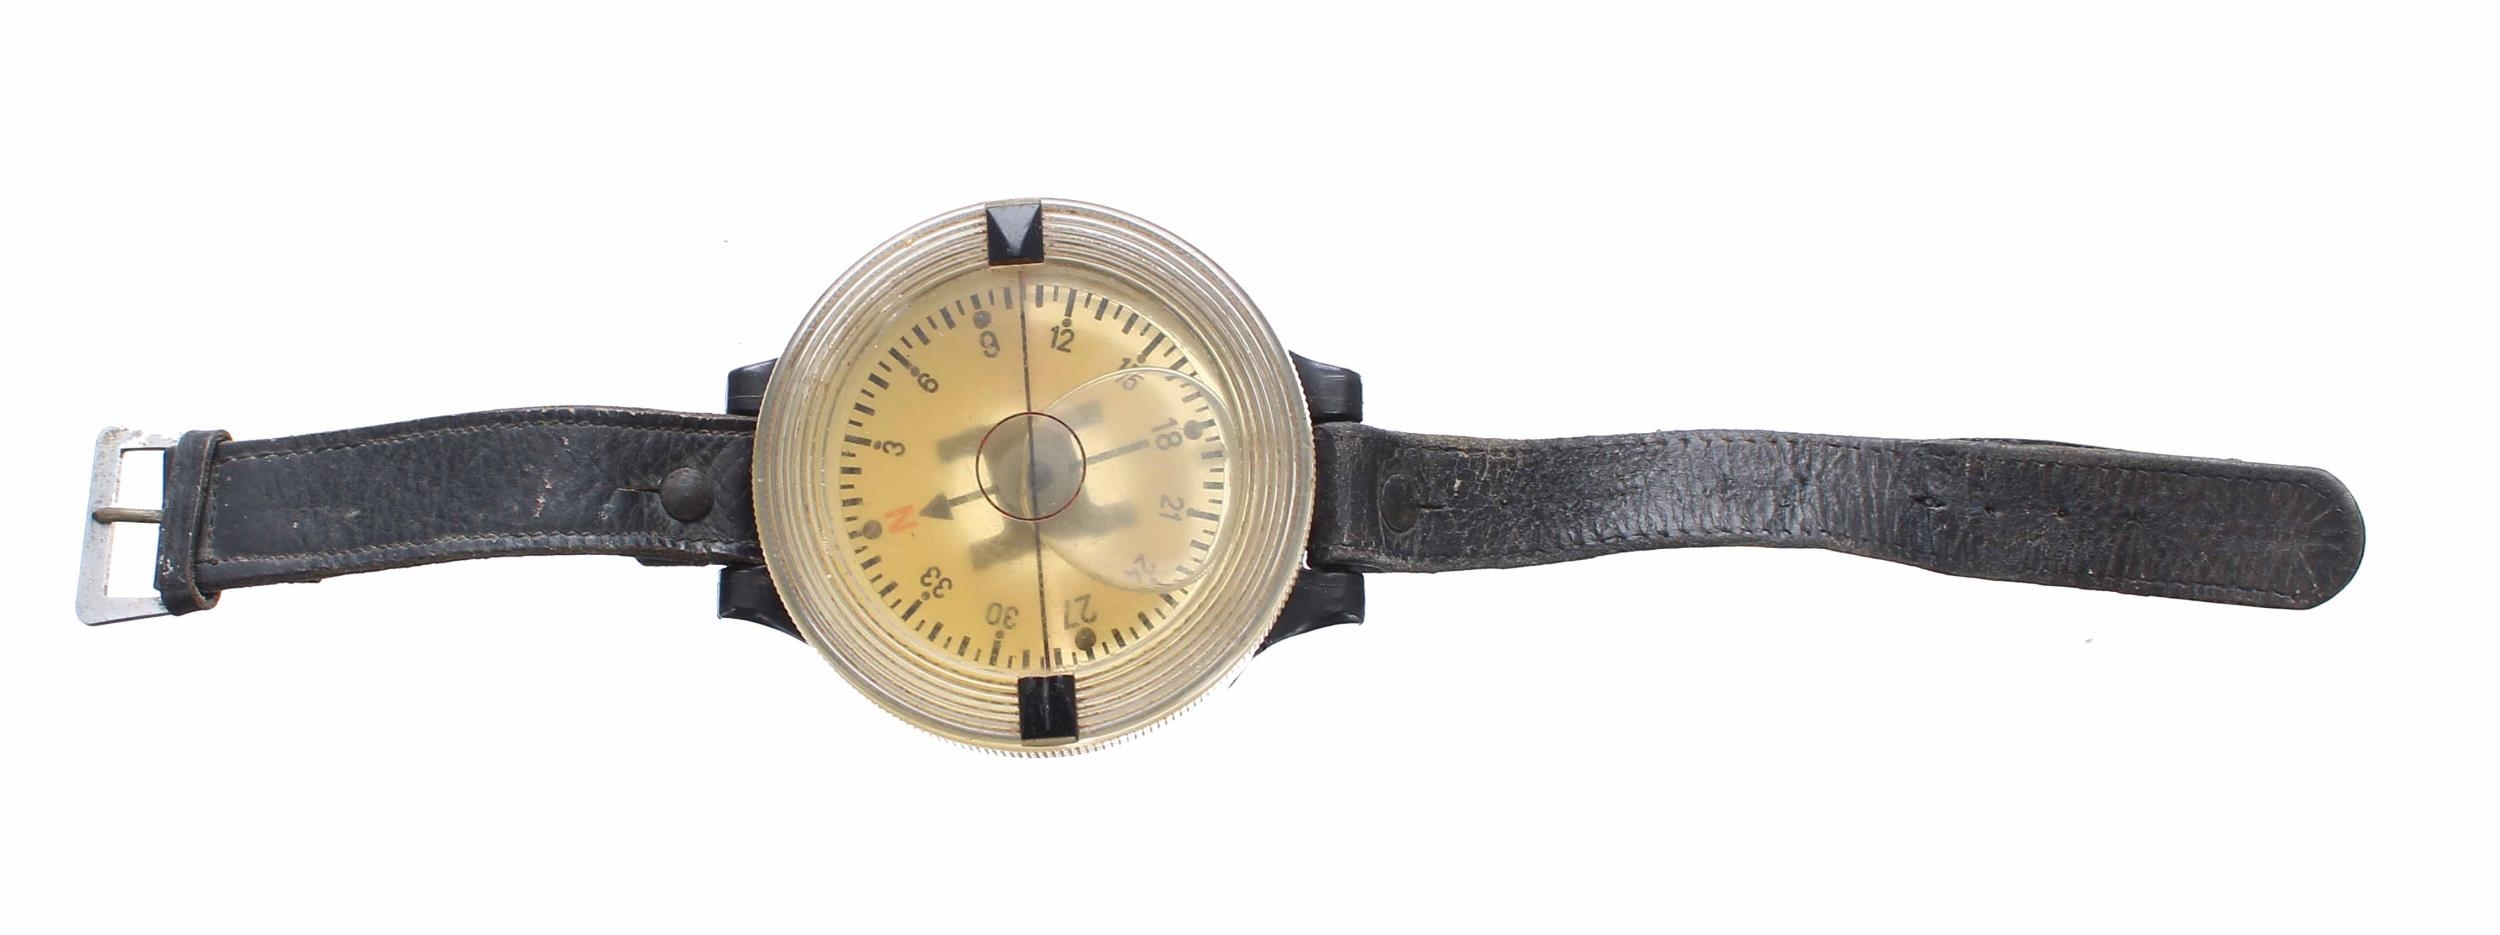 WWII Luftwaffe wrist compass, stamped AK 39 FI 23235-1, 6cm diameter